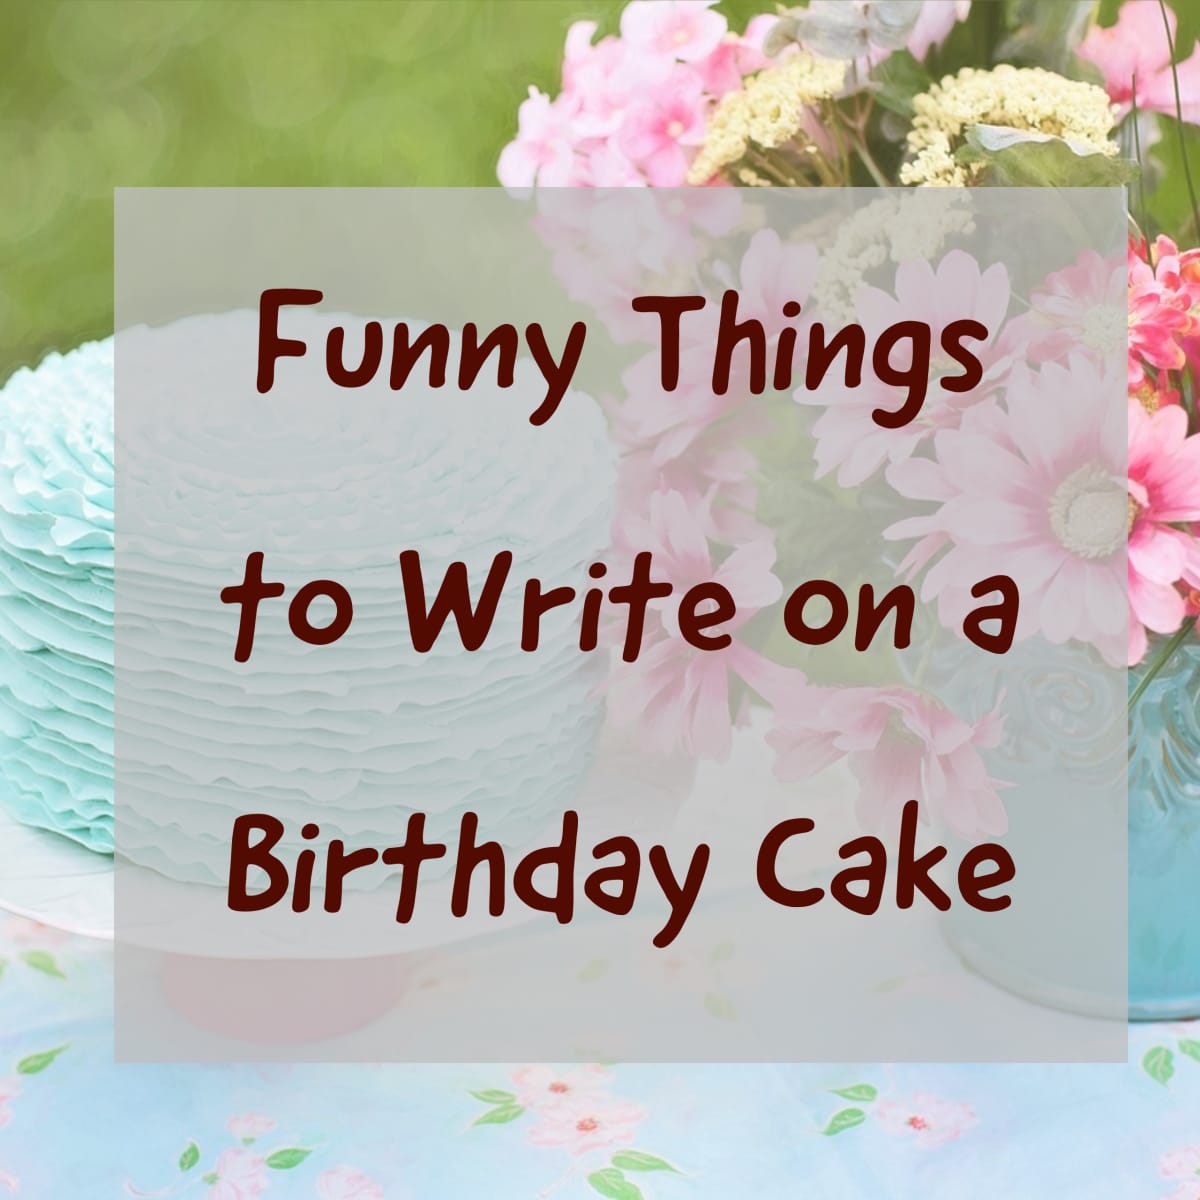 115 Catchy Birthday Cake Slogans Taglines  Ideas  Tiplance